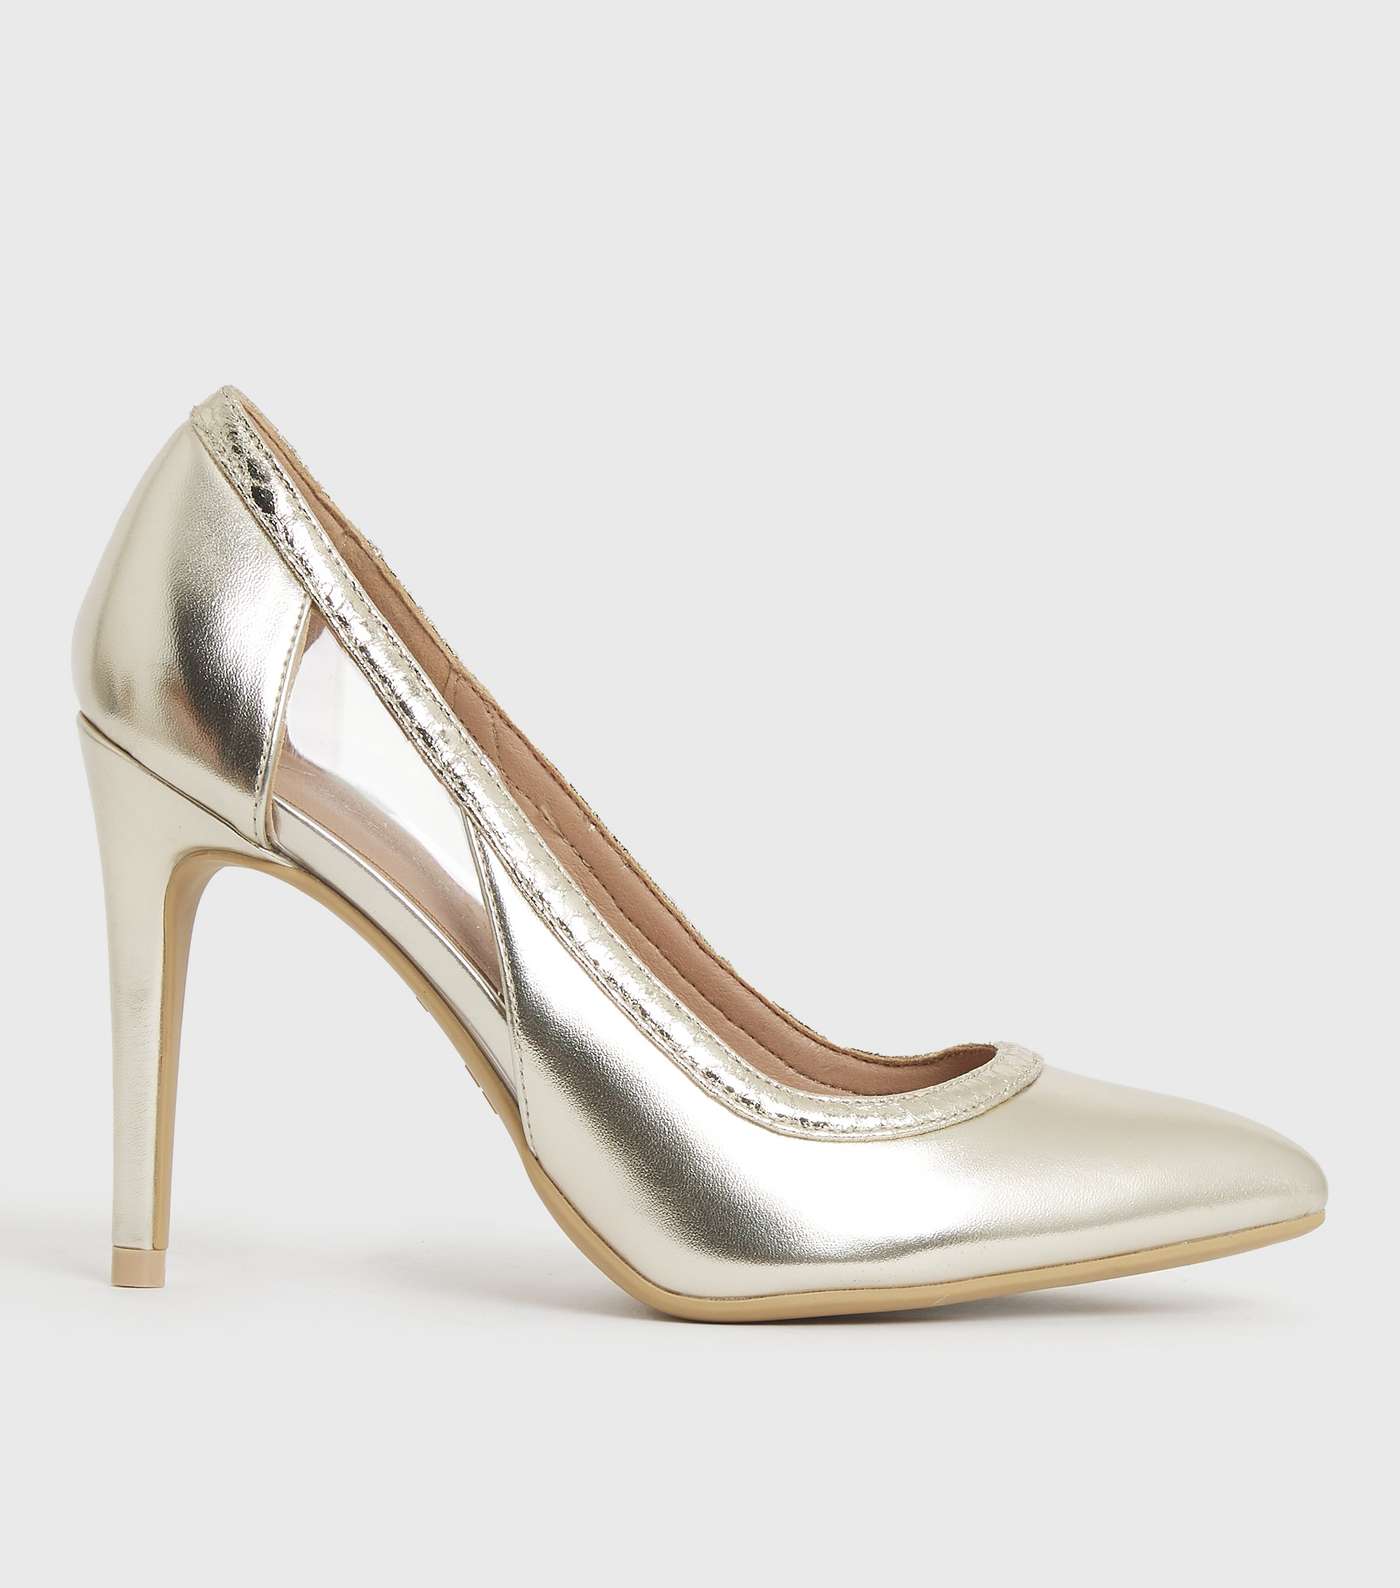 Gold Metallic Pointed Stiletto Heel Court Shoes